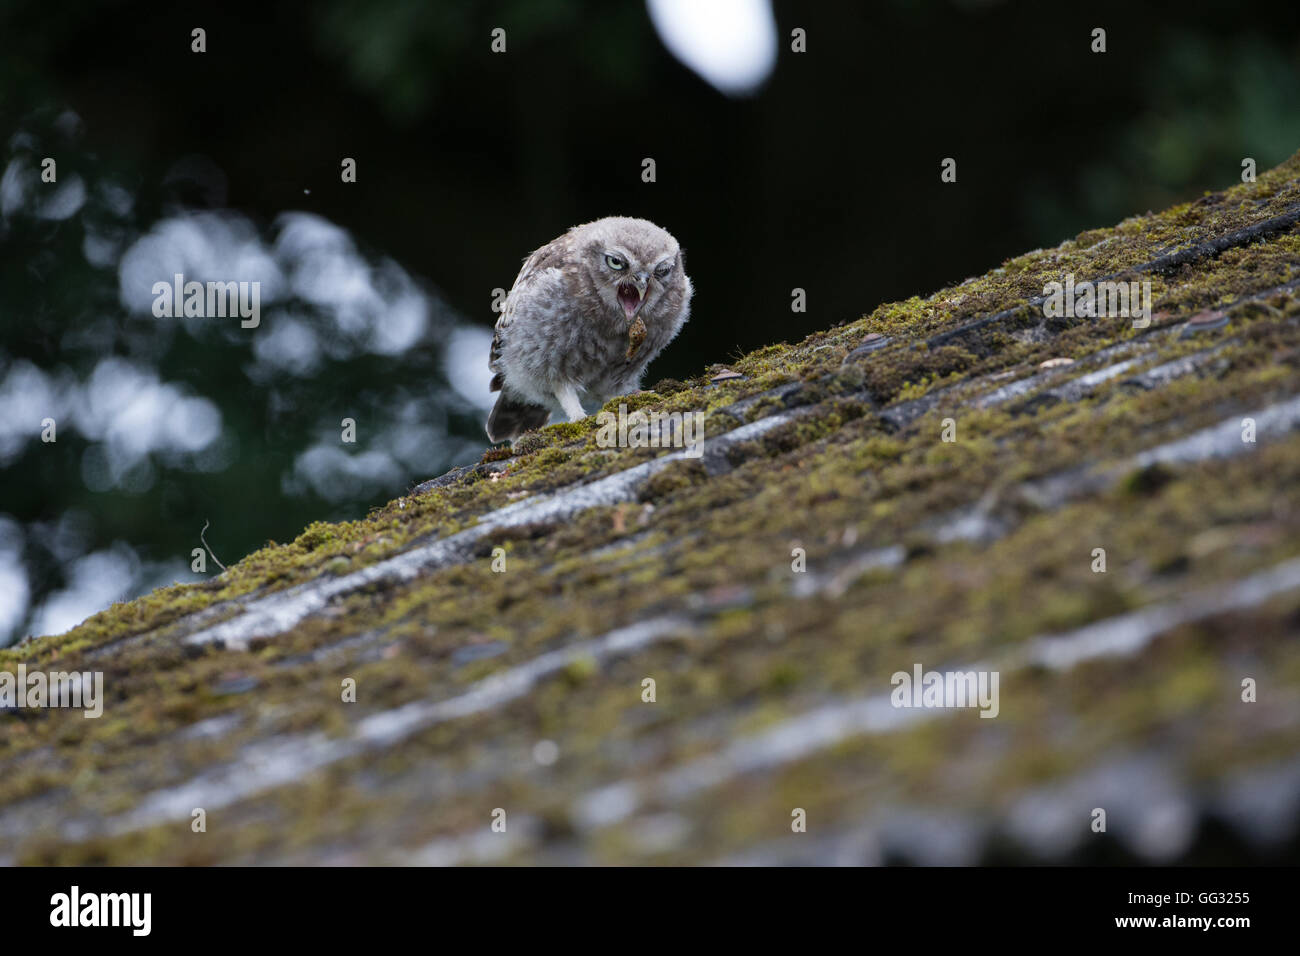 Little owlet regurgitating a pellet. Stock Photo